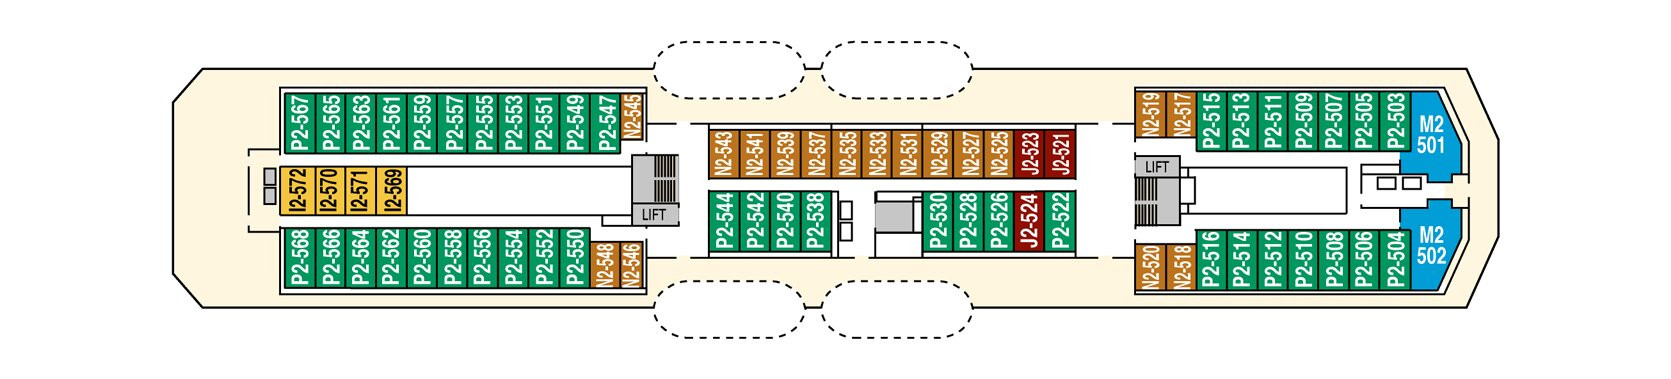 1548636372.6576_d269_Hurtigruten MS Kong Harald Deck Plans Deck 5.png